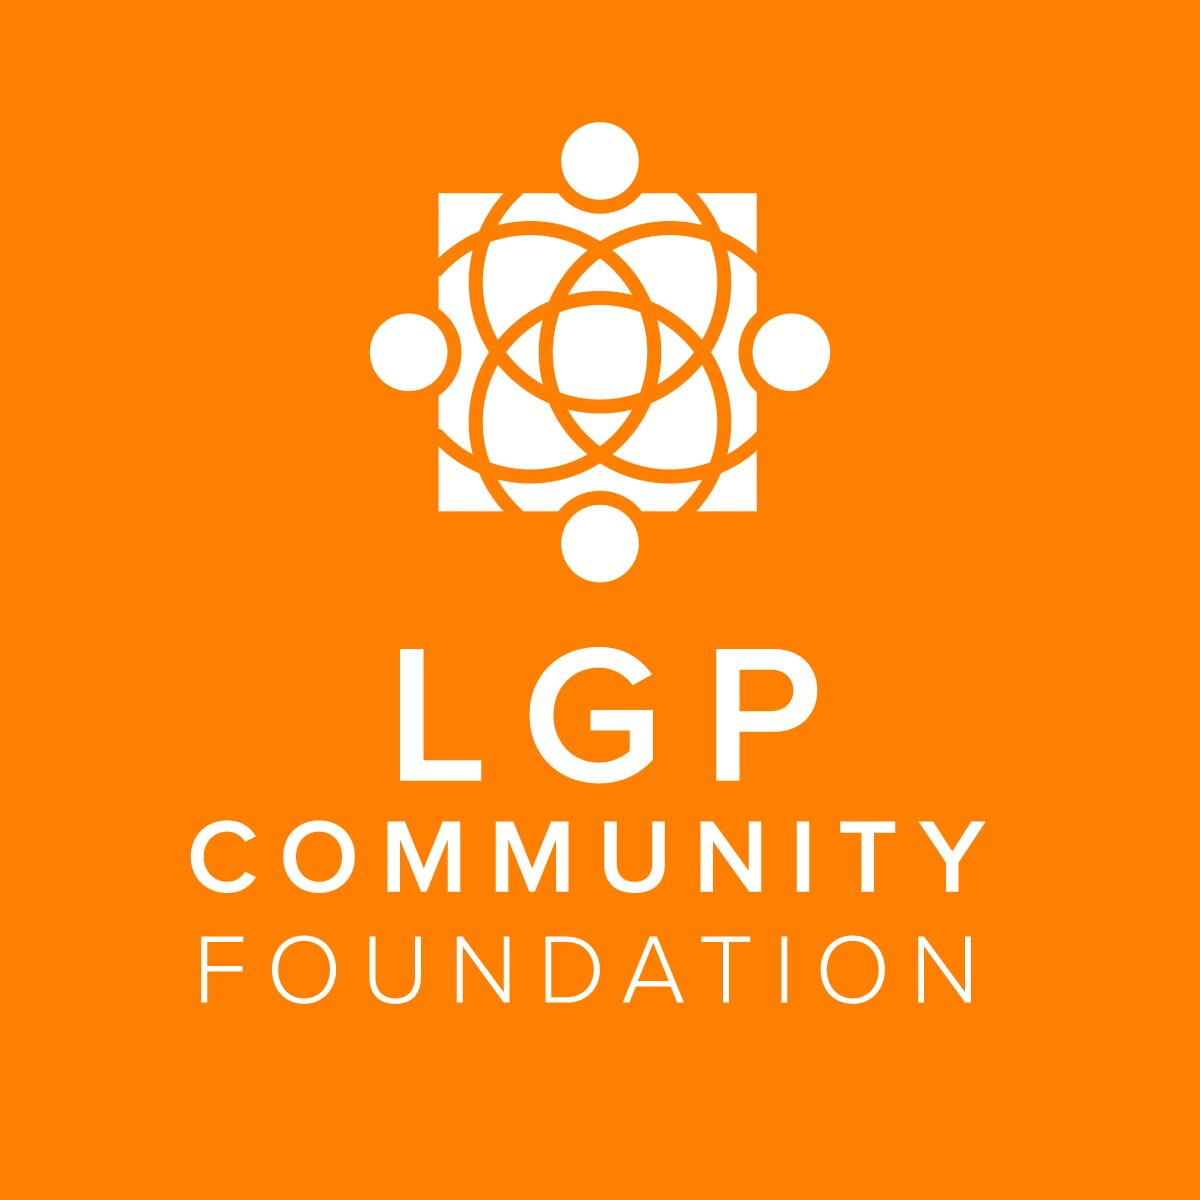 LGP Community Foundation